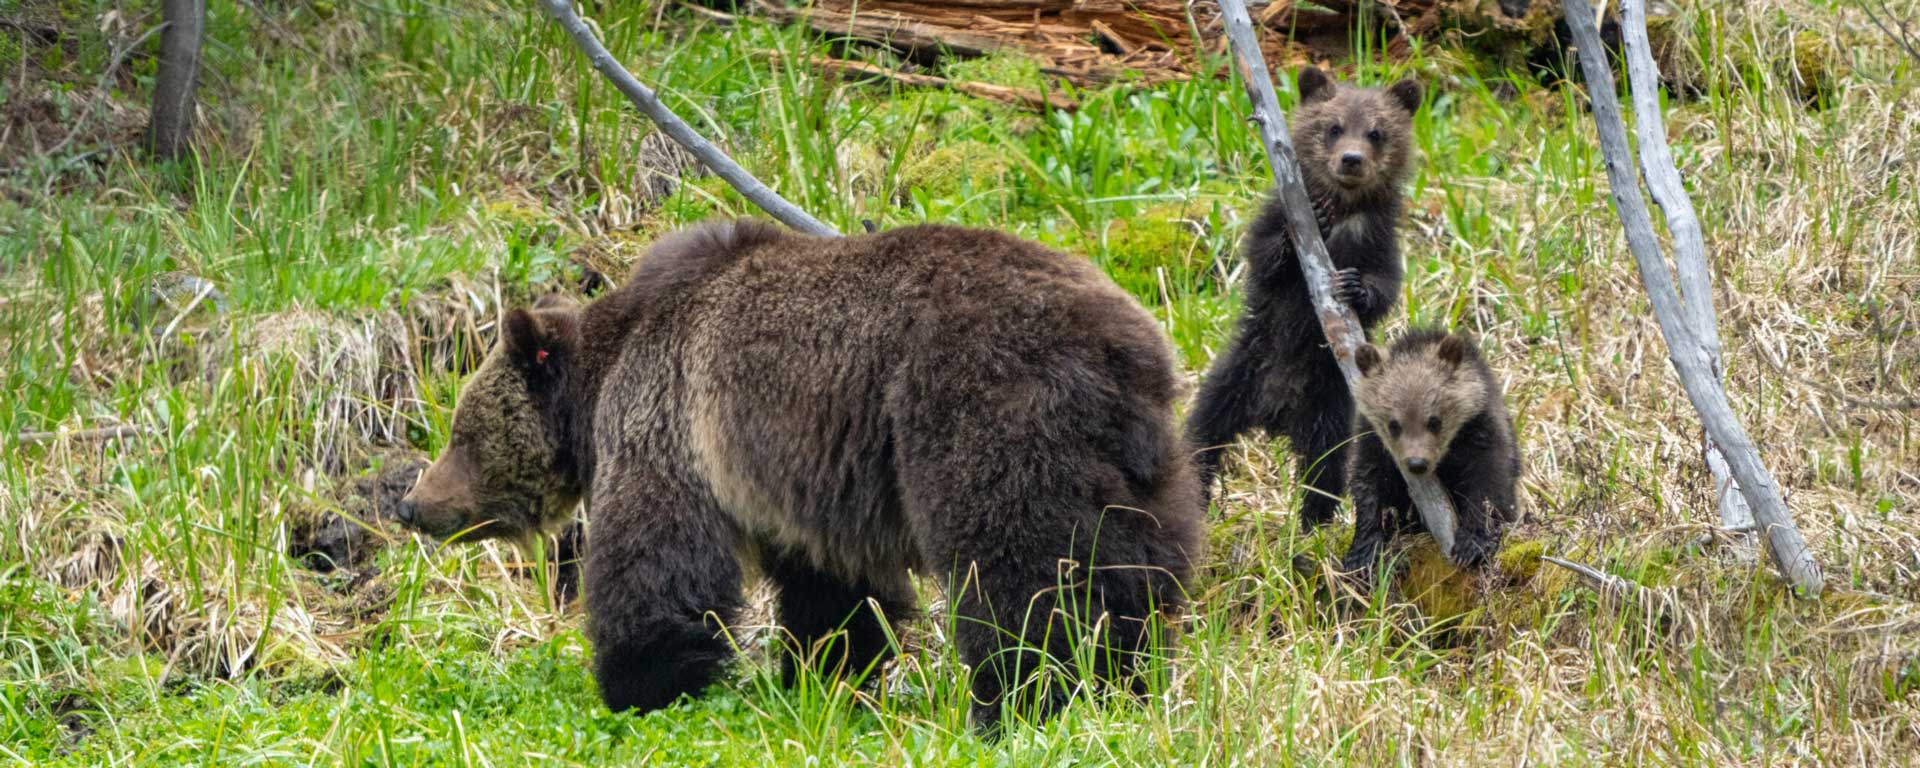 Bear Seen on Yellowstone Tour